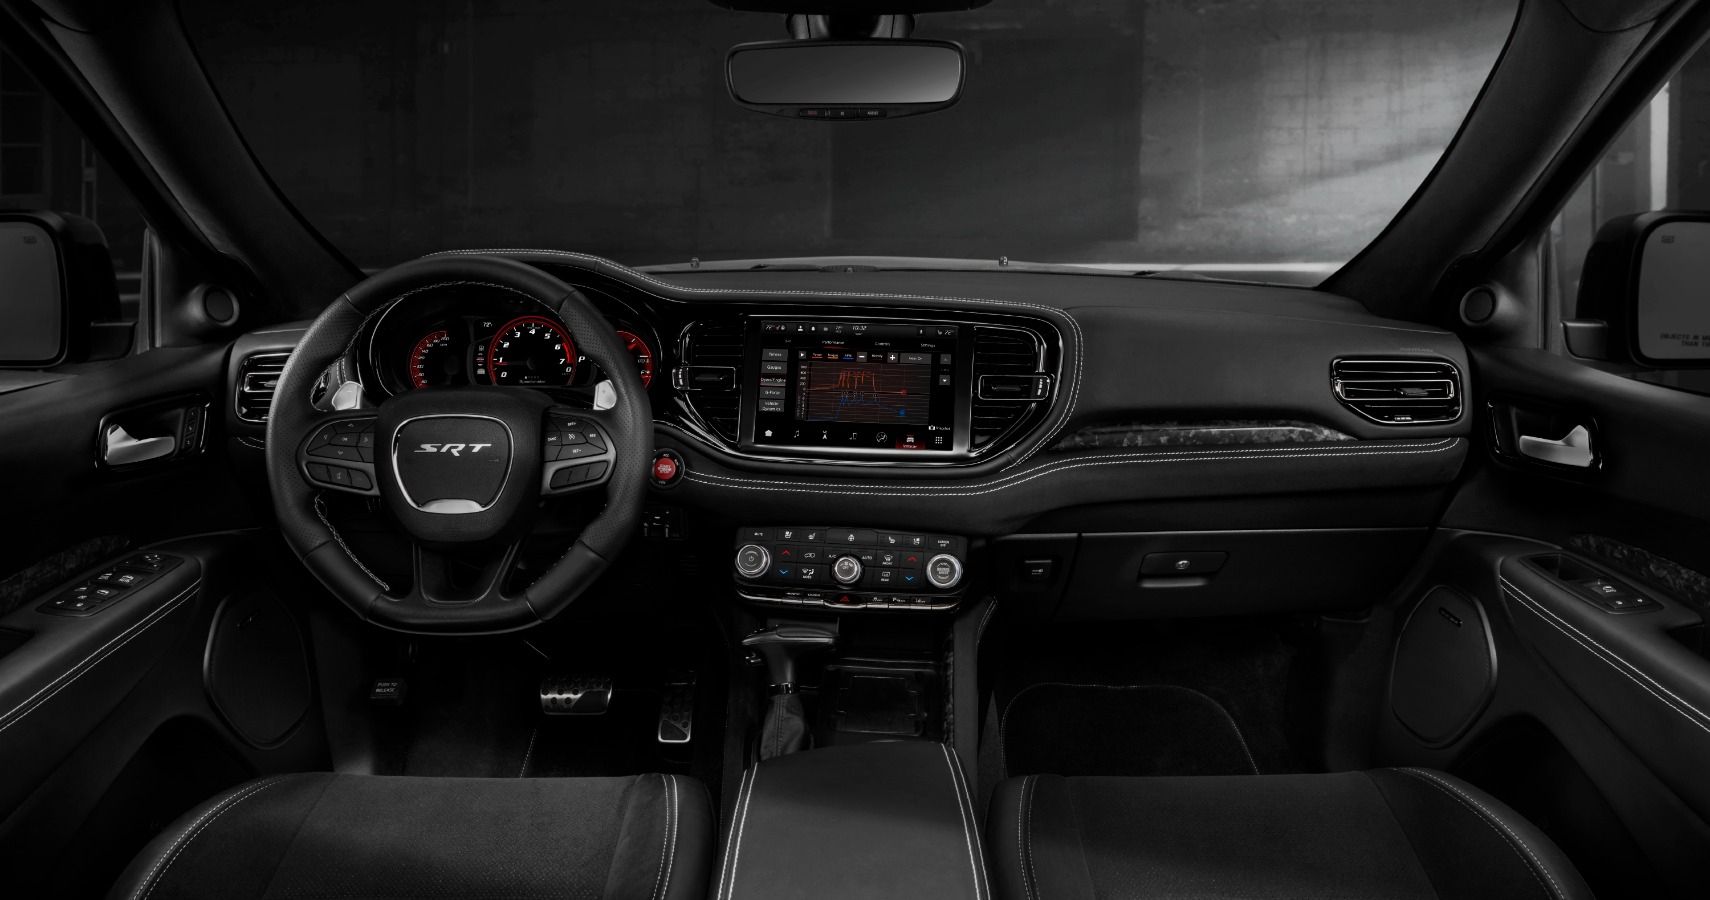 A peek inside the Dodge Durango Hellcat's interior.